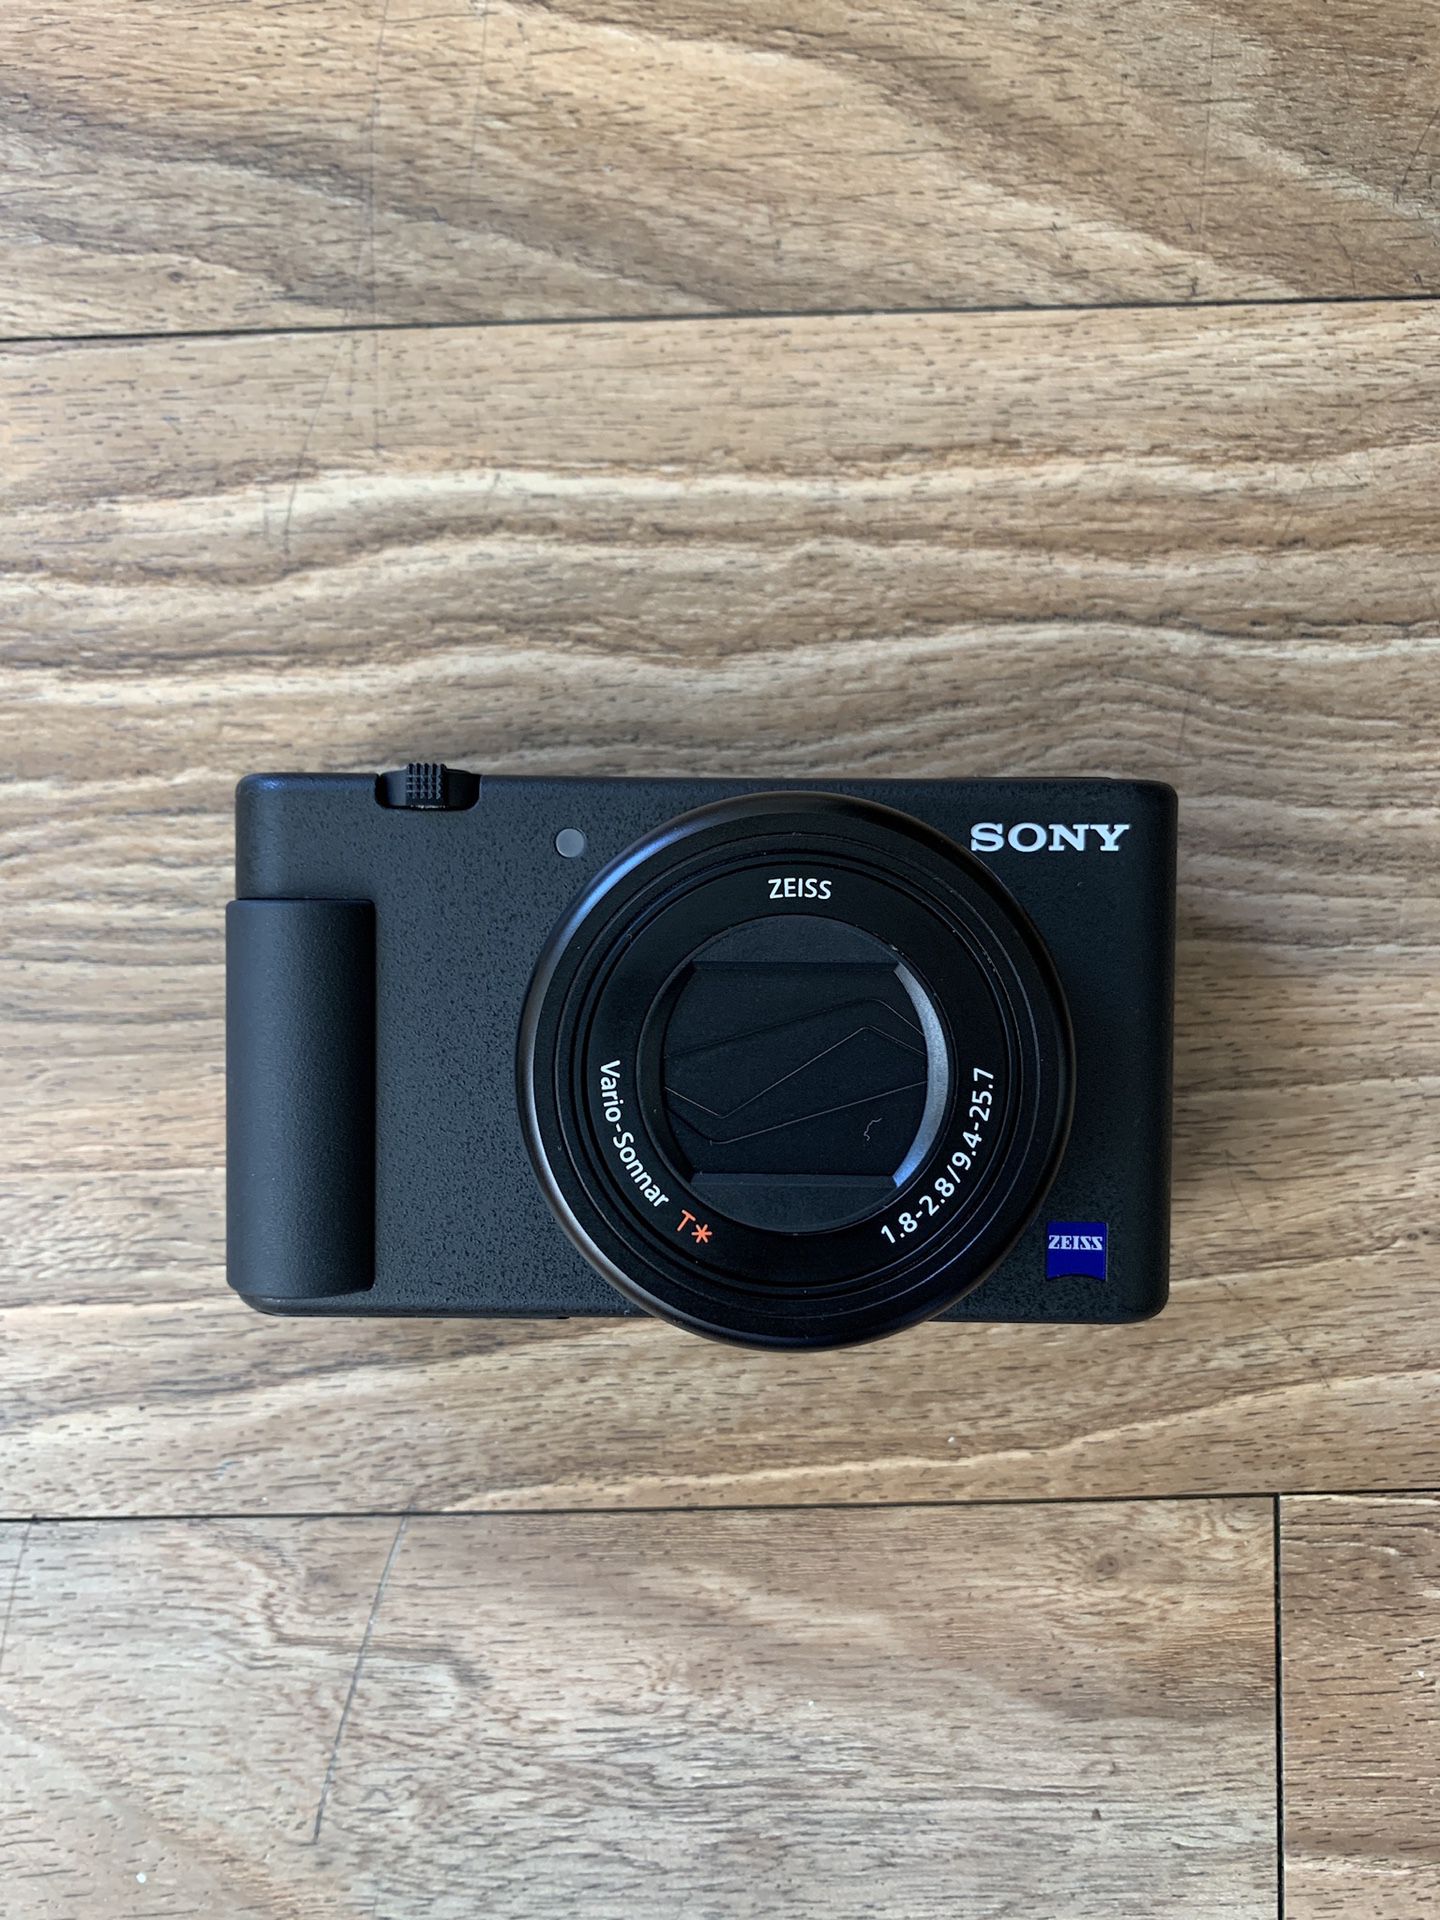 Sony Zv1 camera